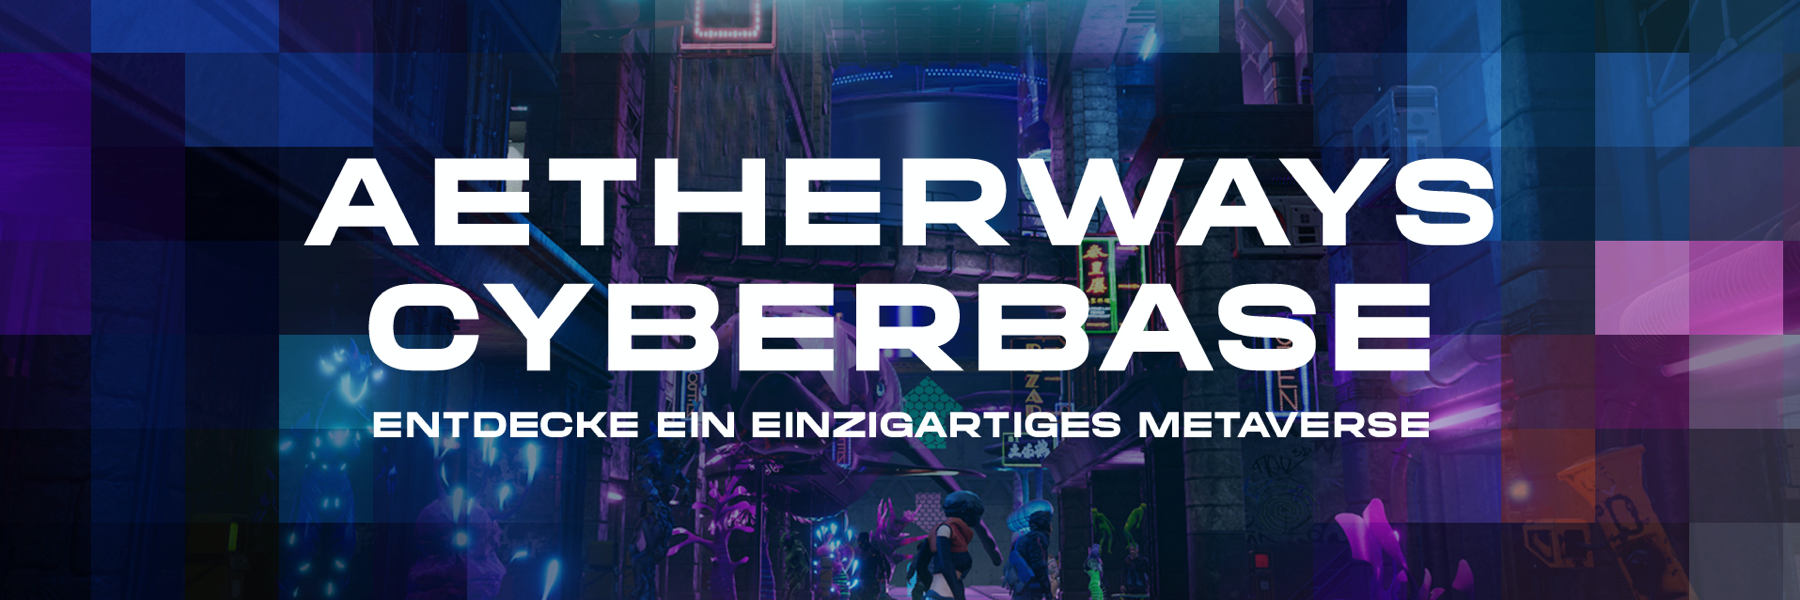 Aetherways Cyberbase